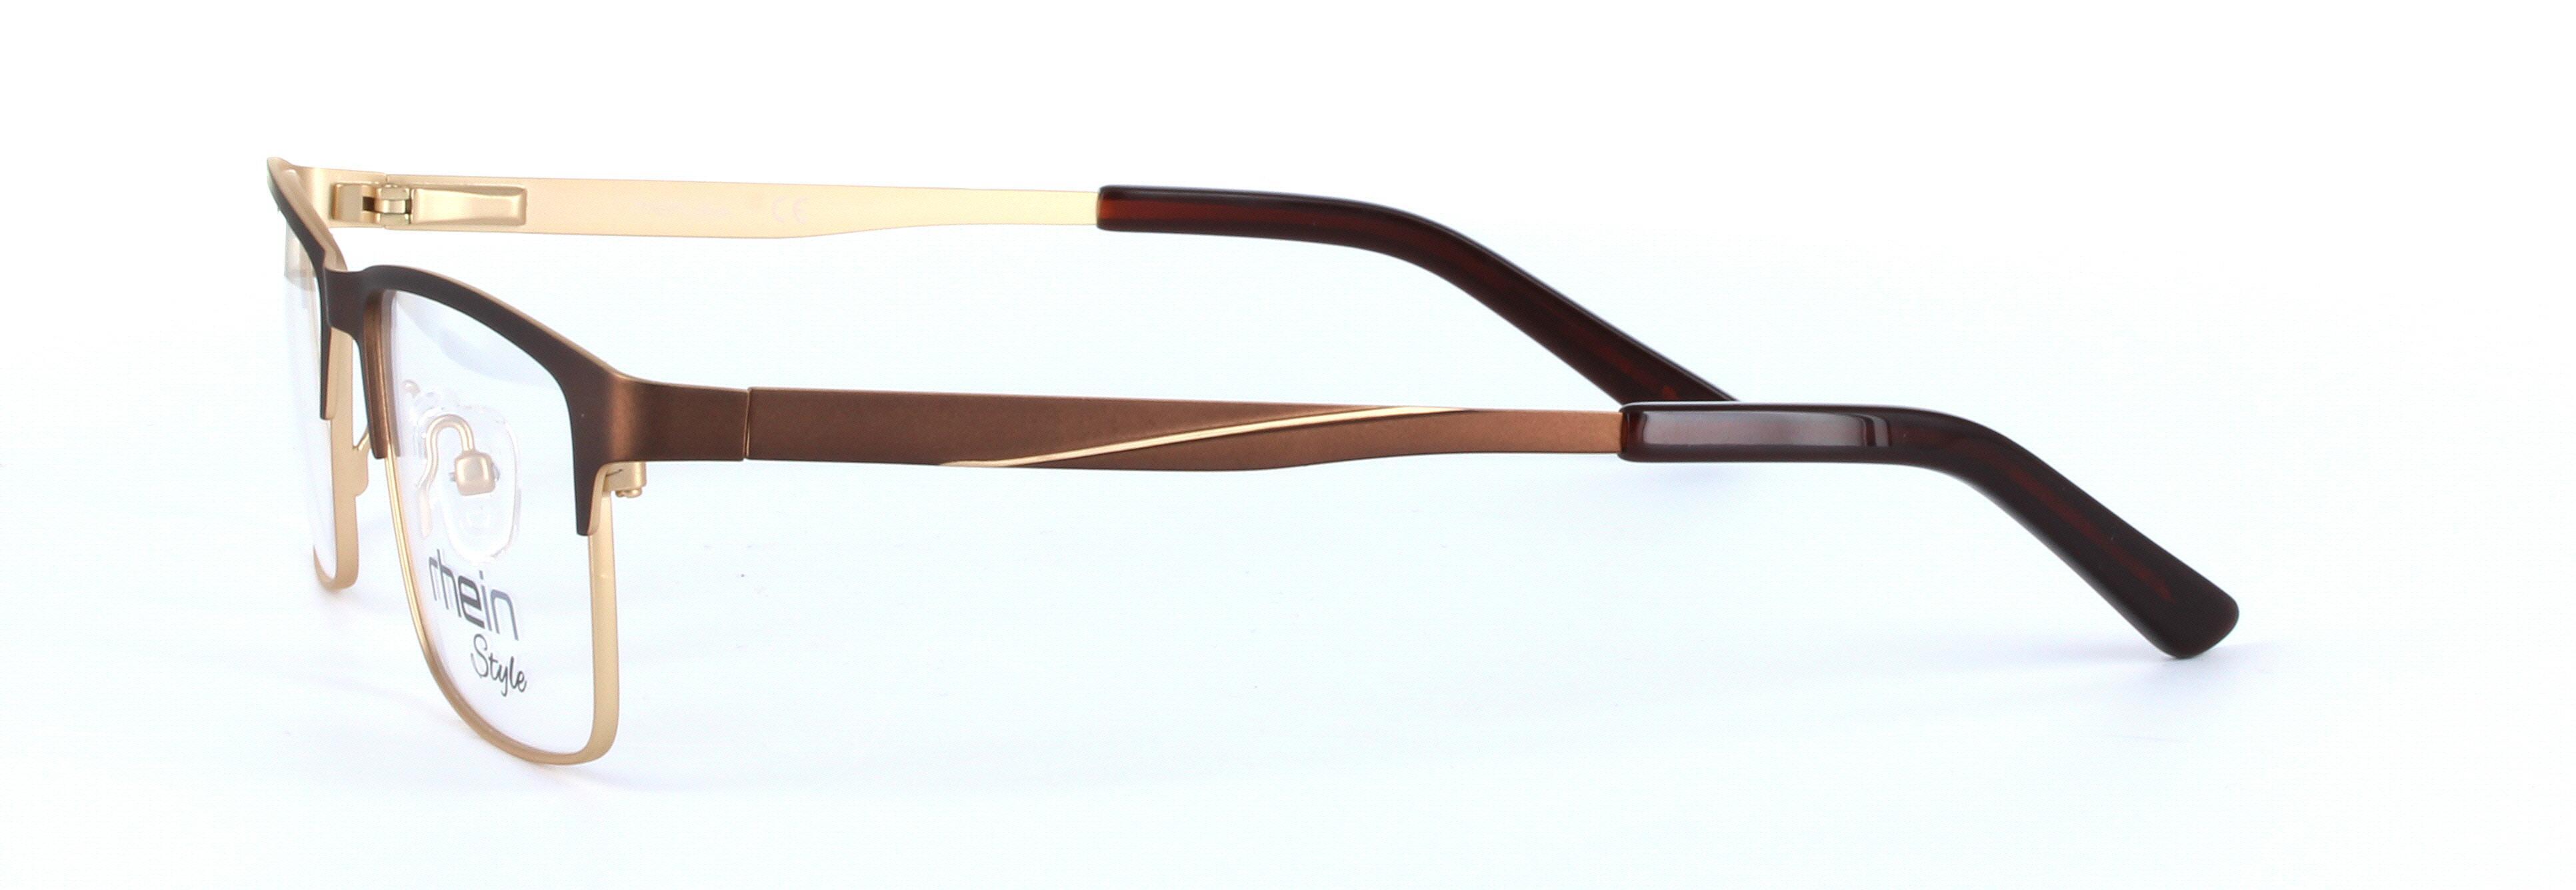 Codey Bronze Full Rim Oval Rectangular Metal Glasses - Image View 2